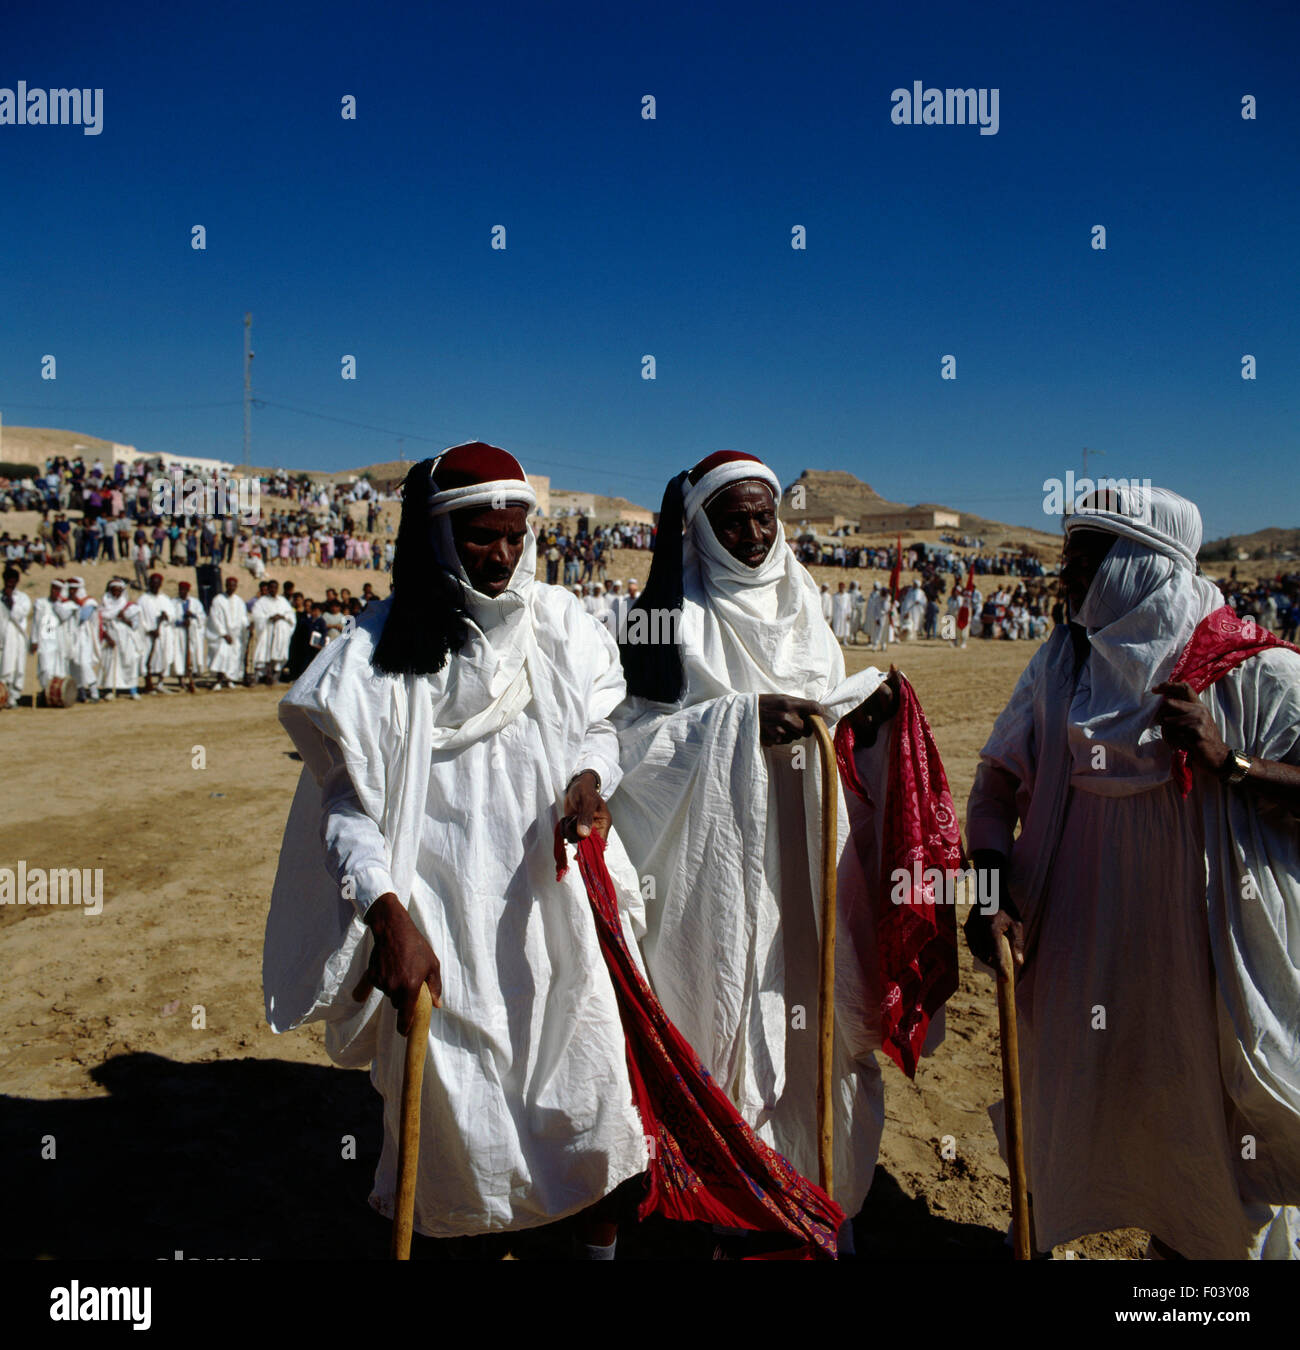 Men in traditional clothes during a Berber festival, Matmata, Tunisia. Stock Photo